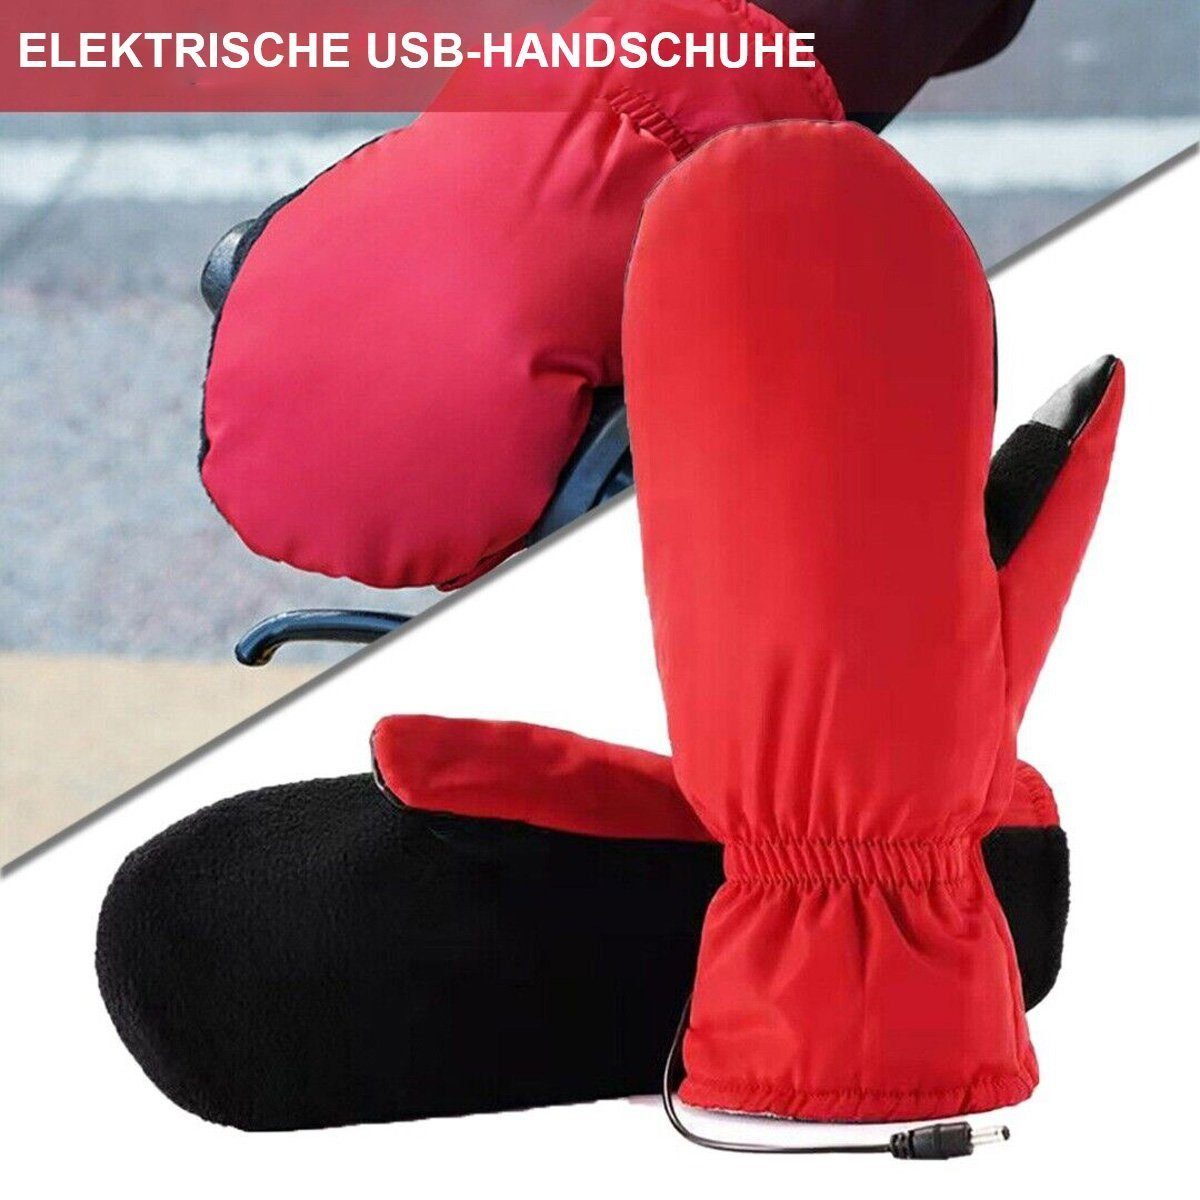 AUKUU Multisporthandschuhe Sporthandschuhe Lederhandschuhe beheizte Elektrisch Handschuhe rot